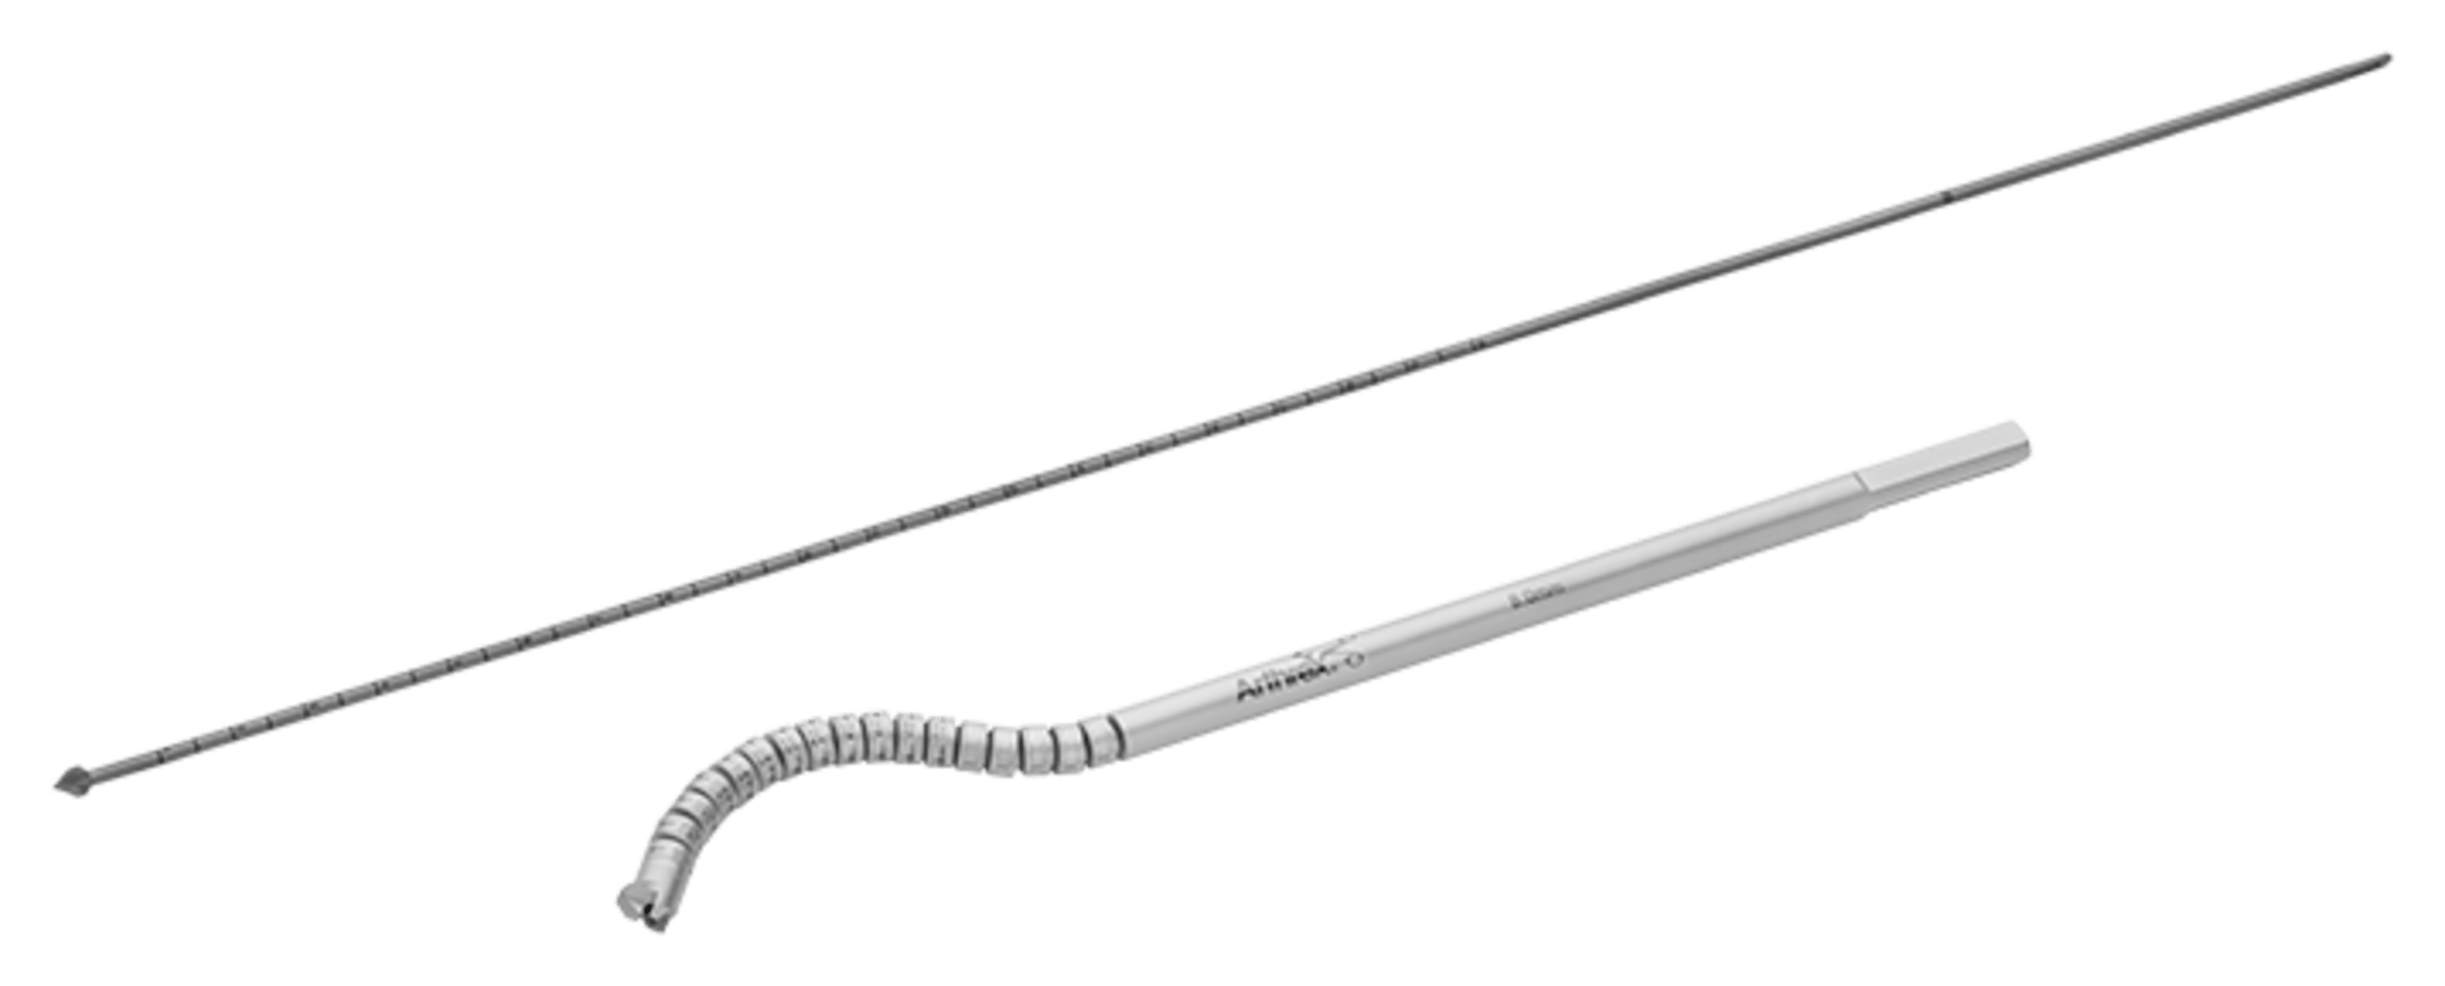 Arthrex Flexible Reamer with Flexible TightRope Drill Pin, 8.0 mm